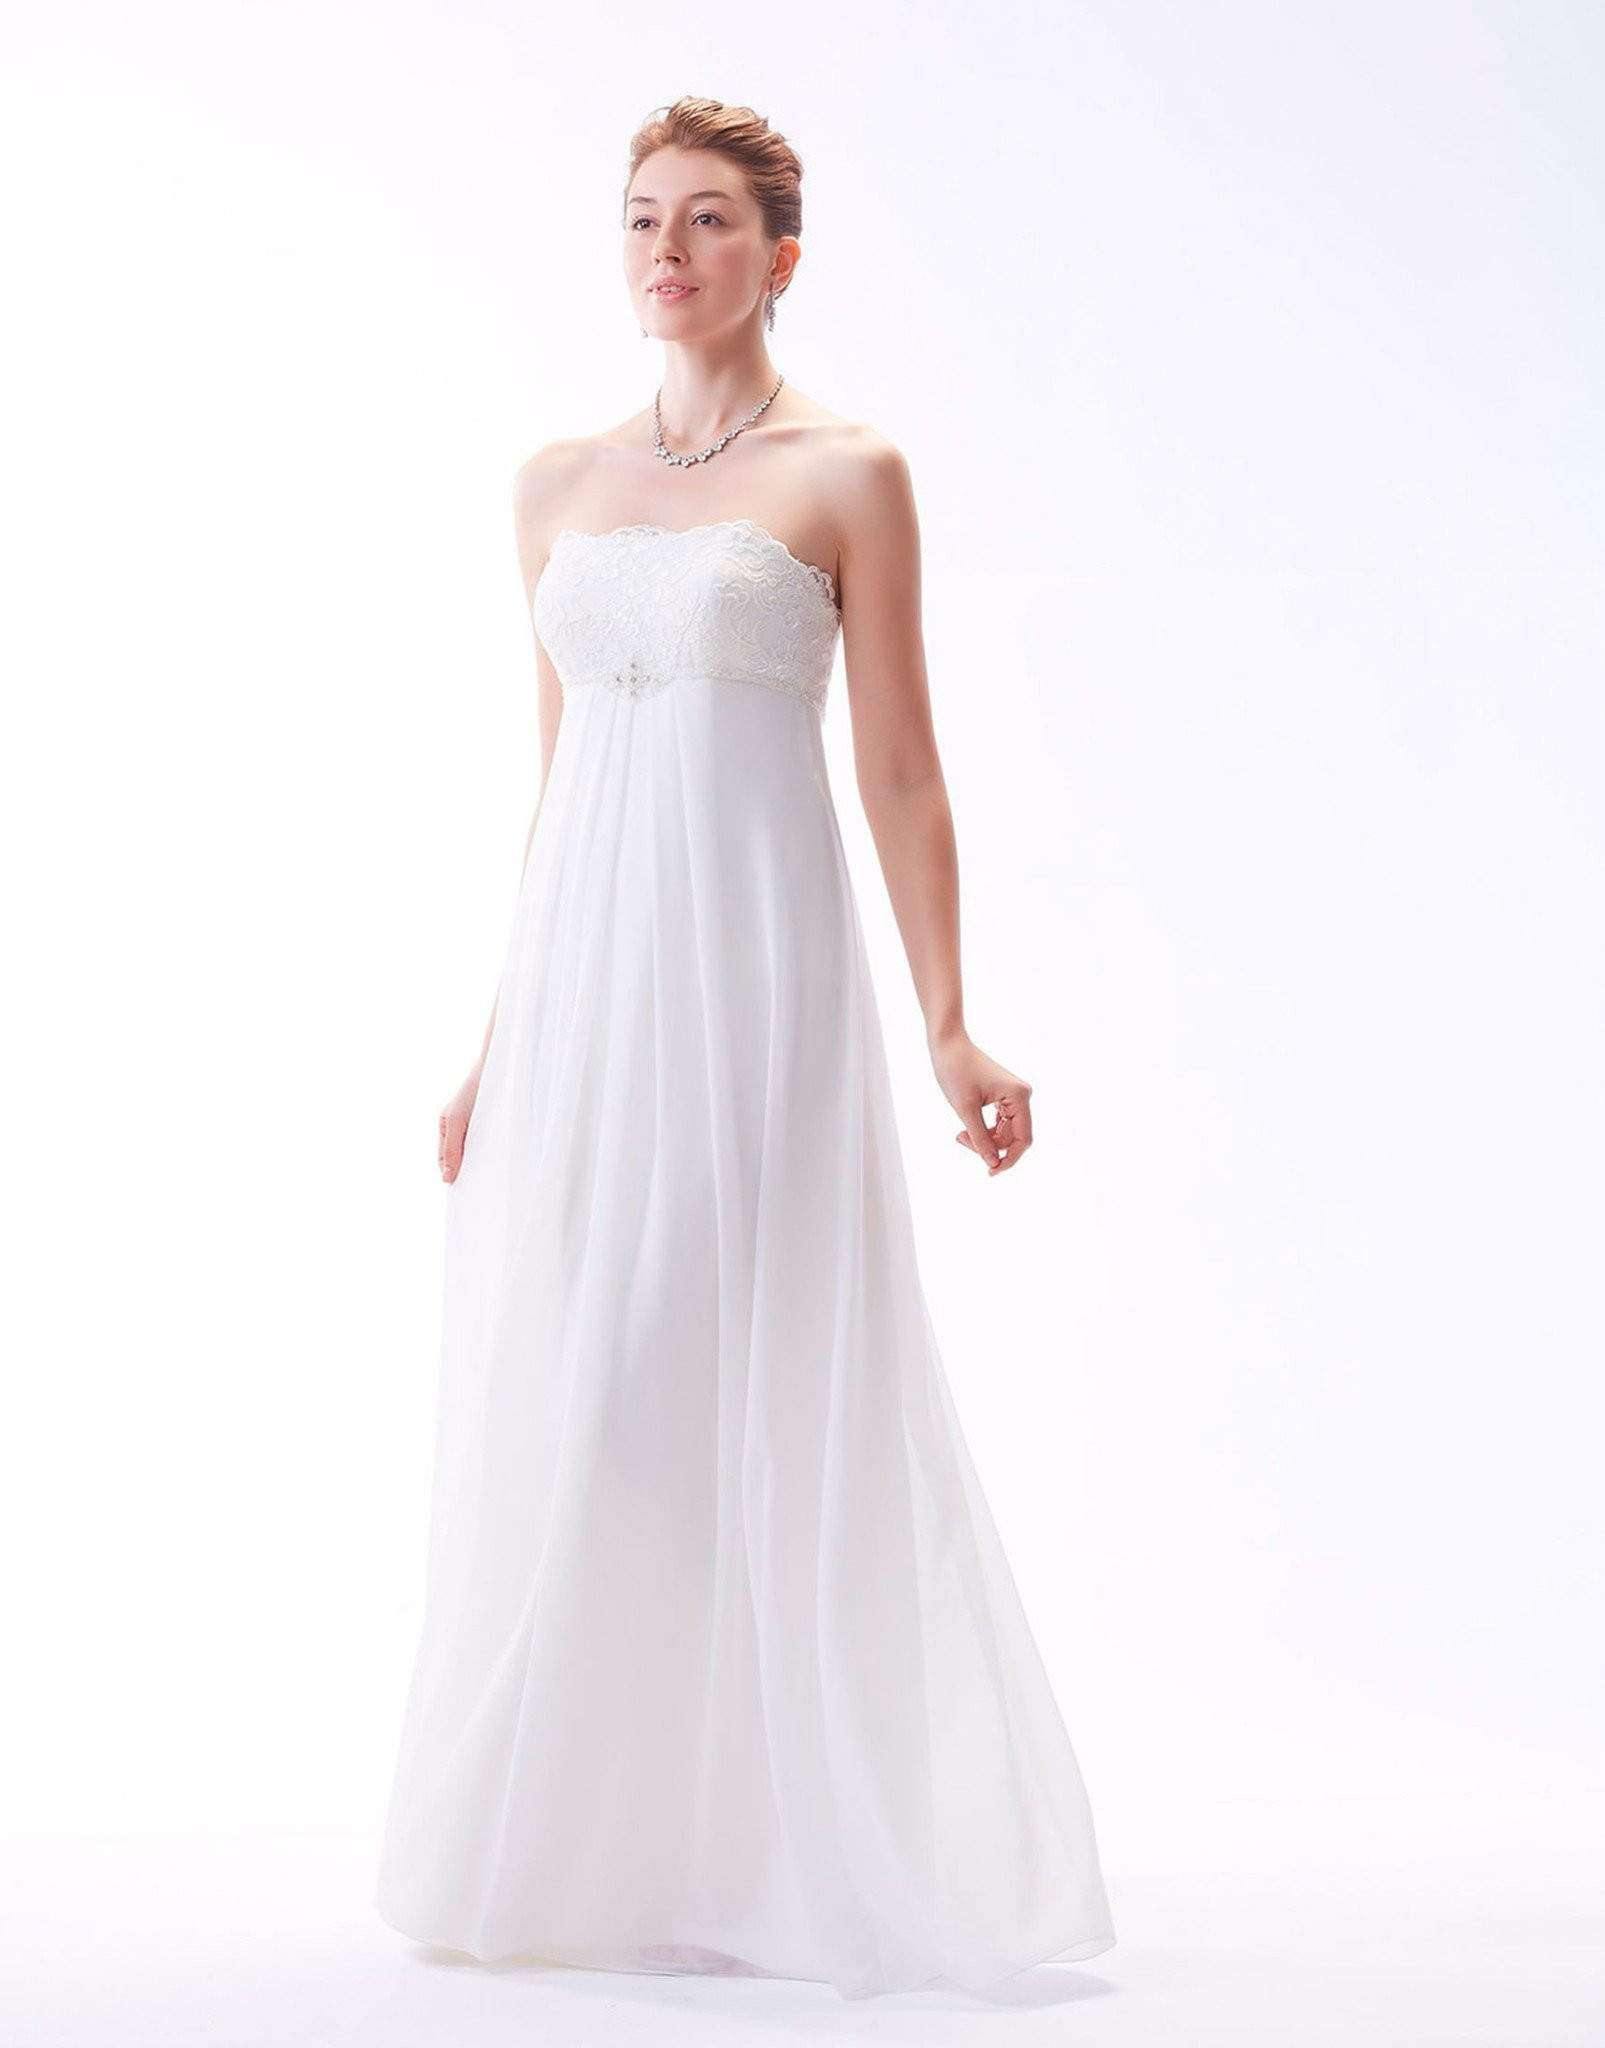 UK20 - VENUS - Jayne - sale - Adore Bridal and Occasion Wear